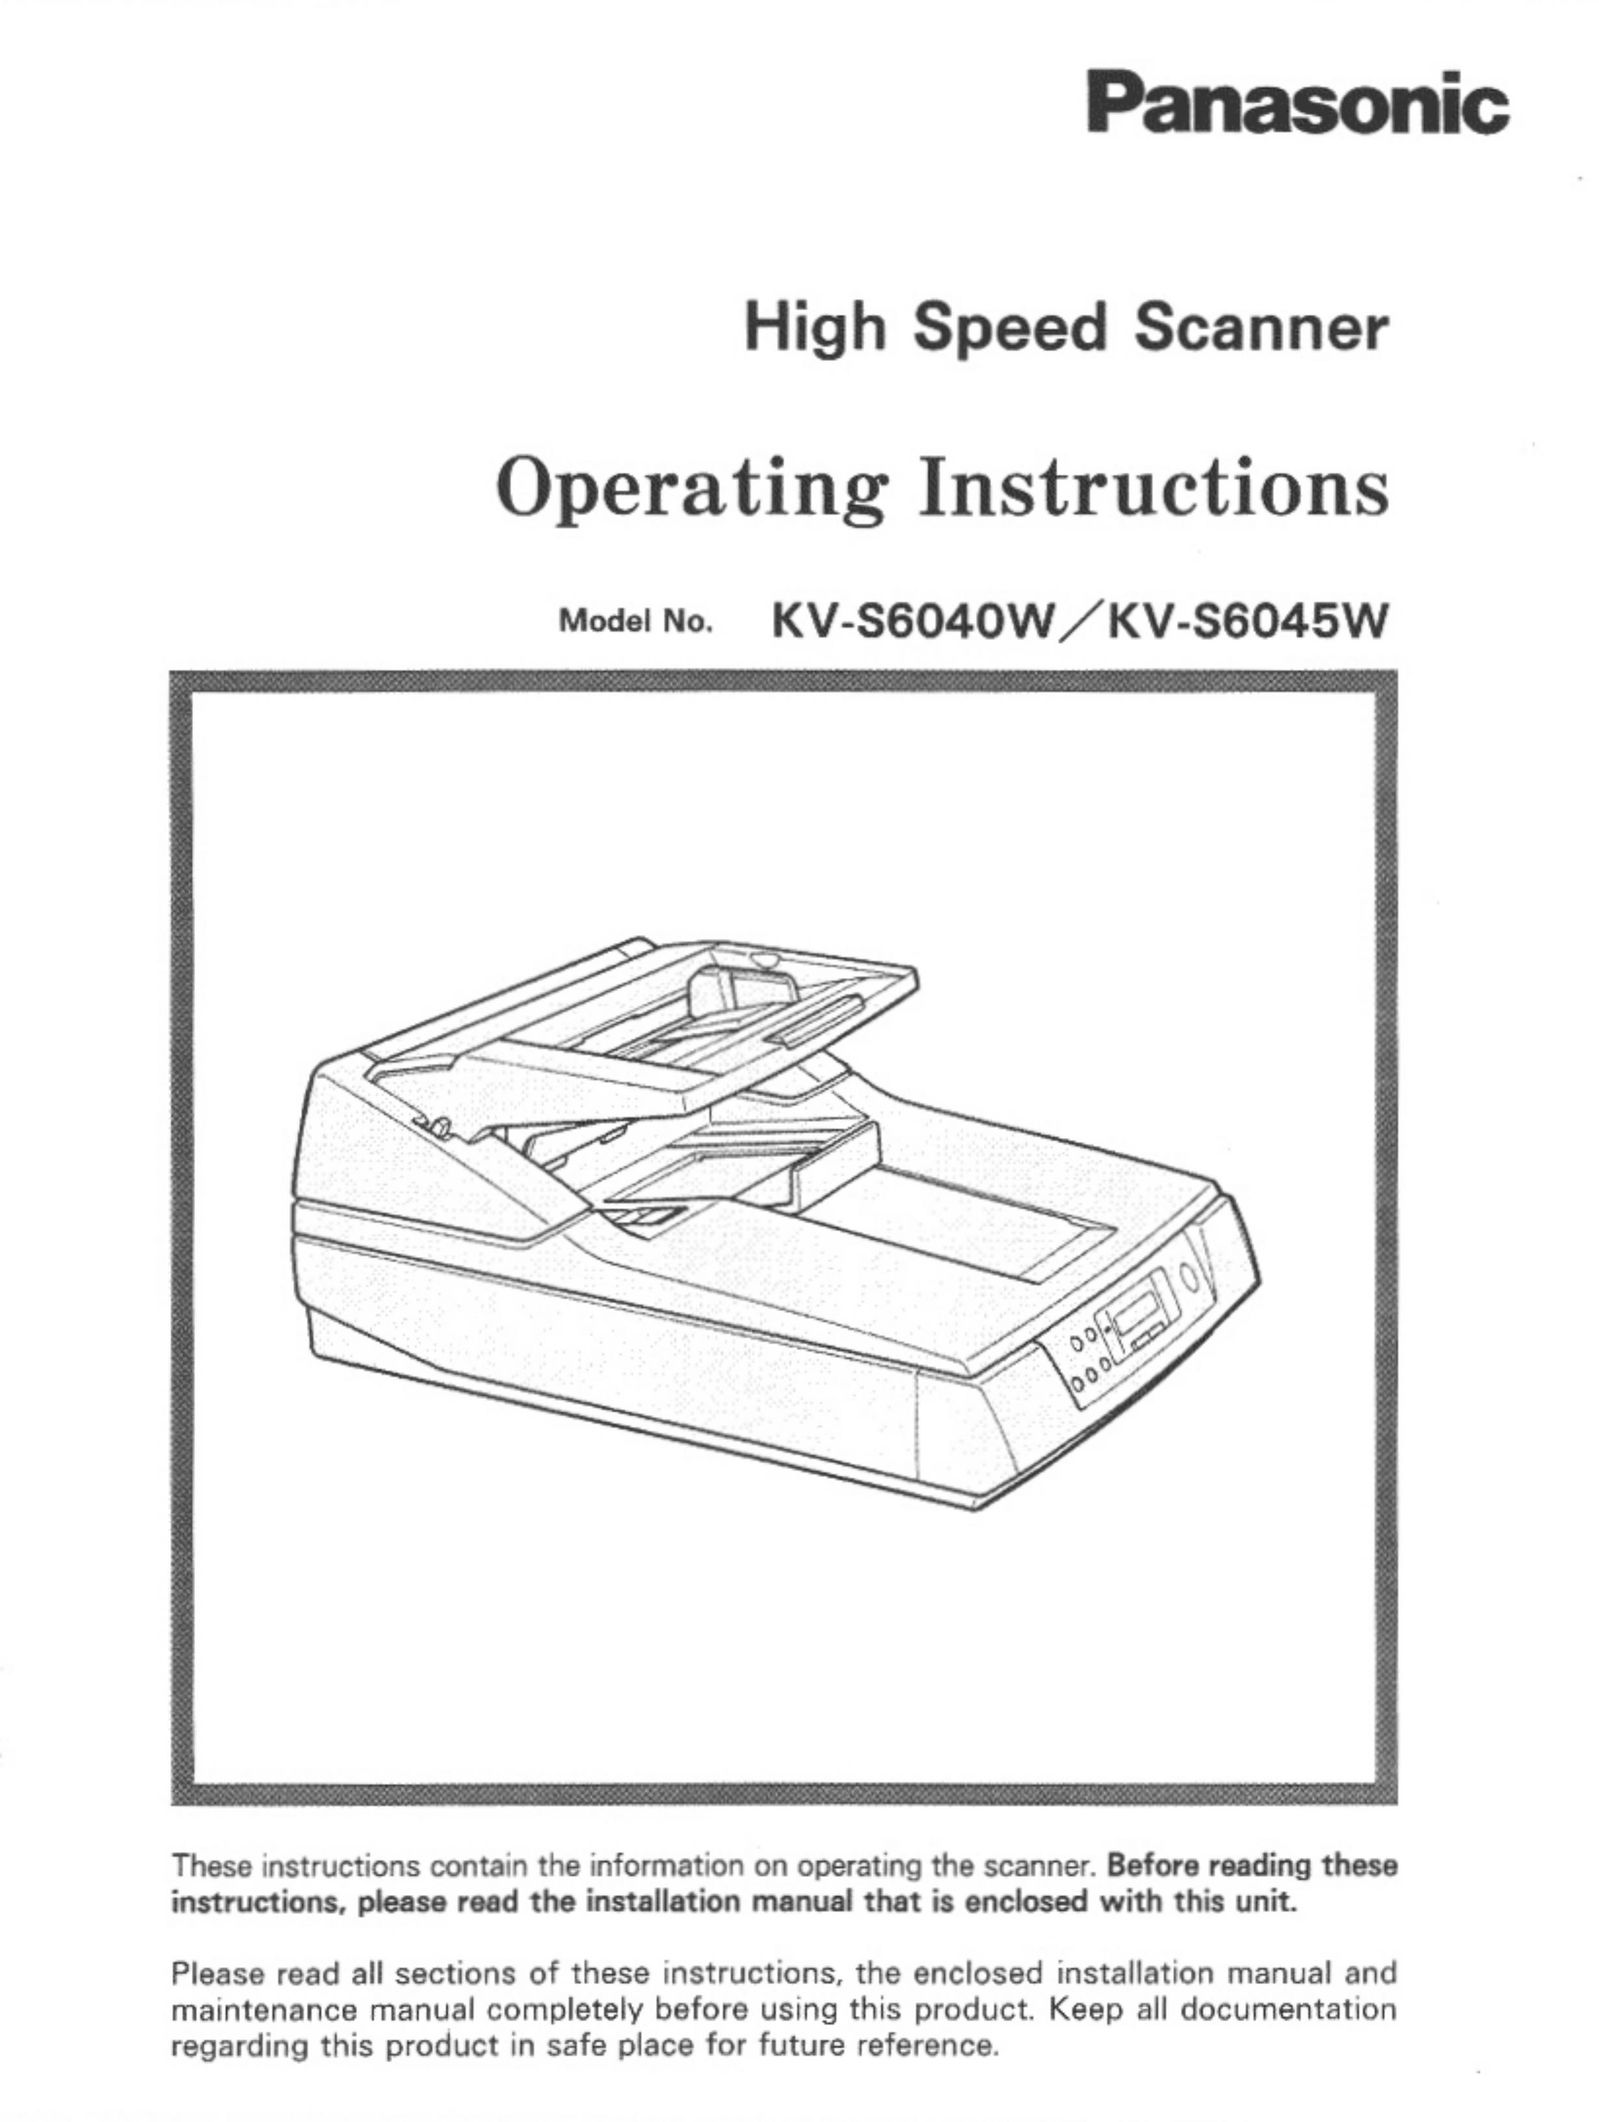 Panasonic KV-S6045W Scanner User Manual